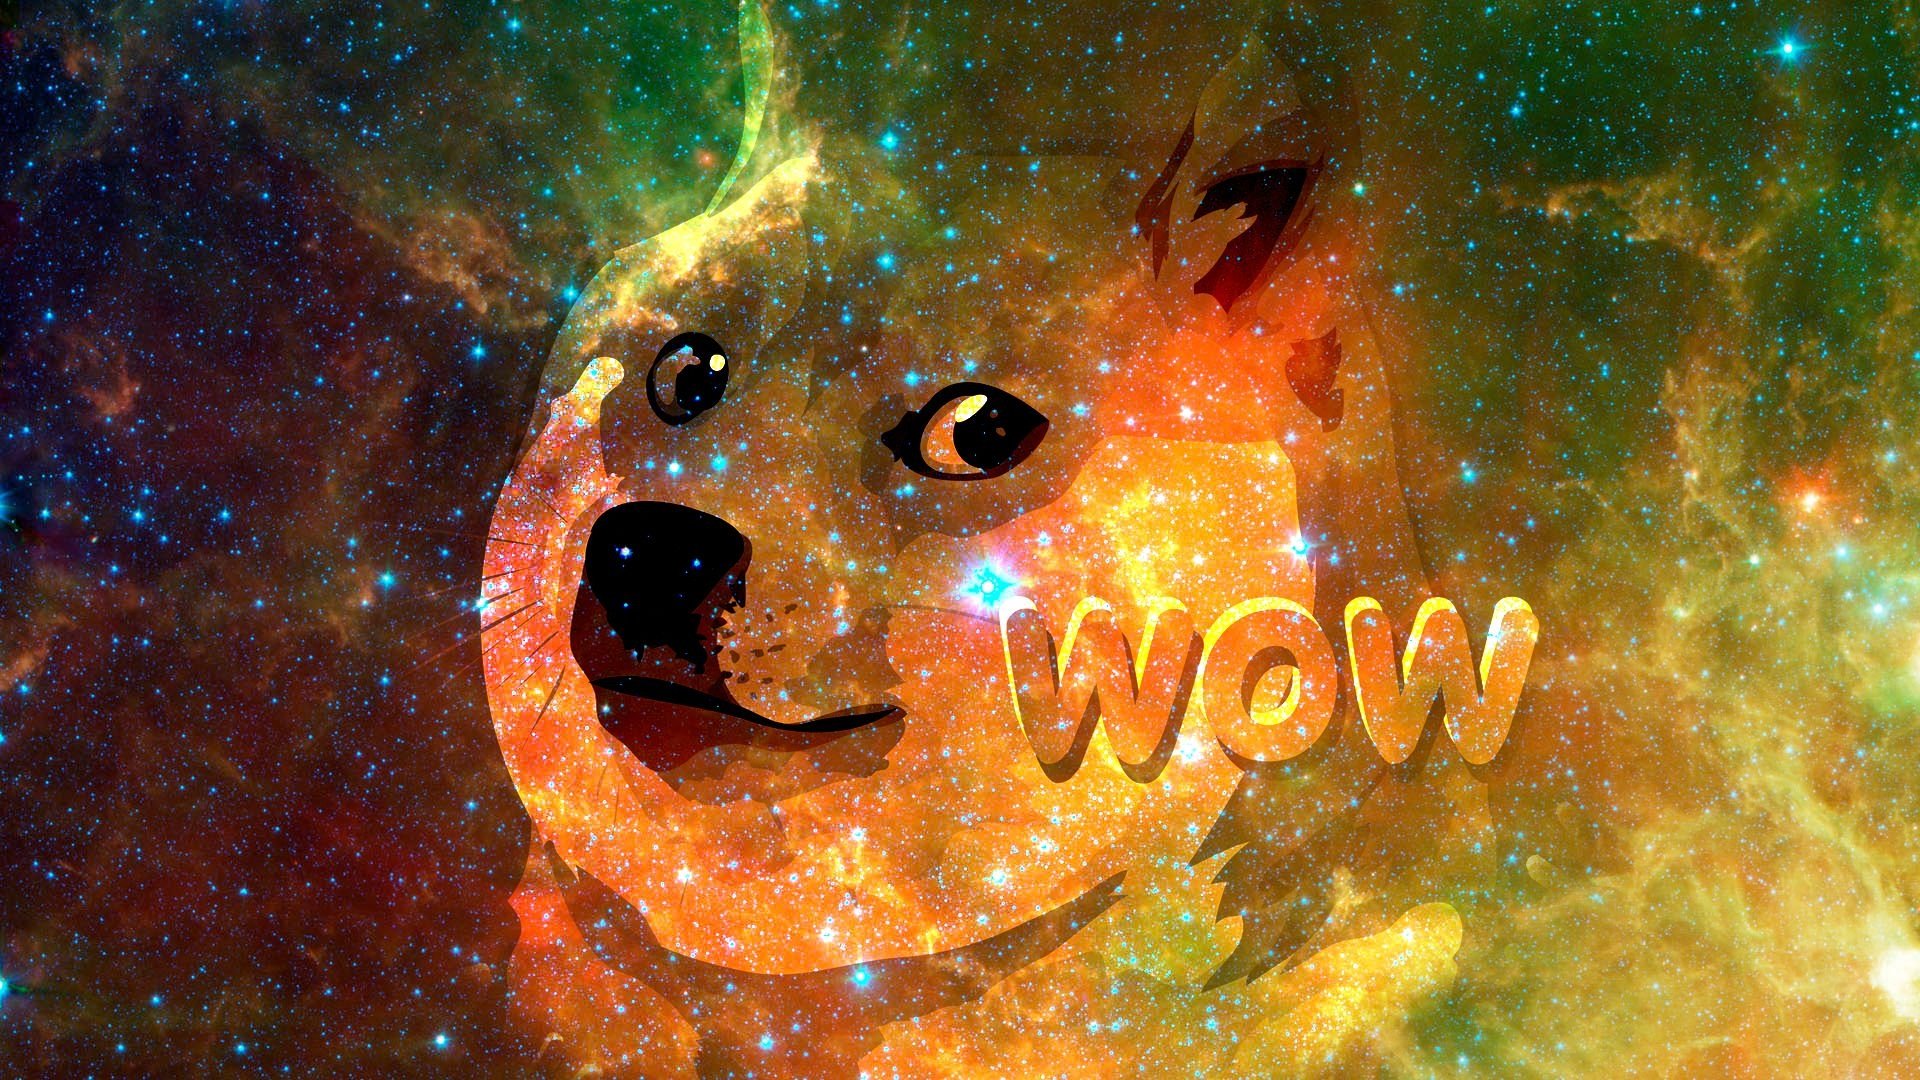 Free download Doge Meme Wallpaper Quality Images iPhoto Pick [1920x1080]  for your Desktop, Mobile & Tablet | Explore 47+ Doge Meme Wallpaper | Meme  Background Pictures, Meme Background, Meme Wallpaper